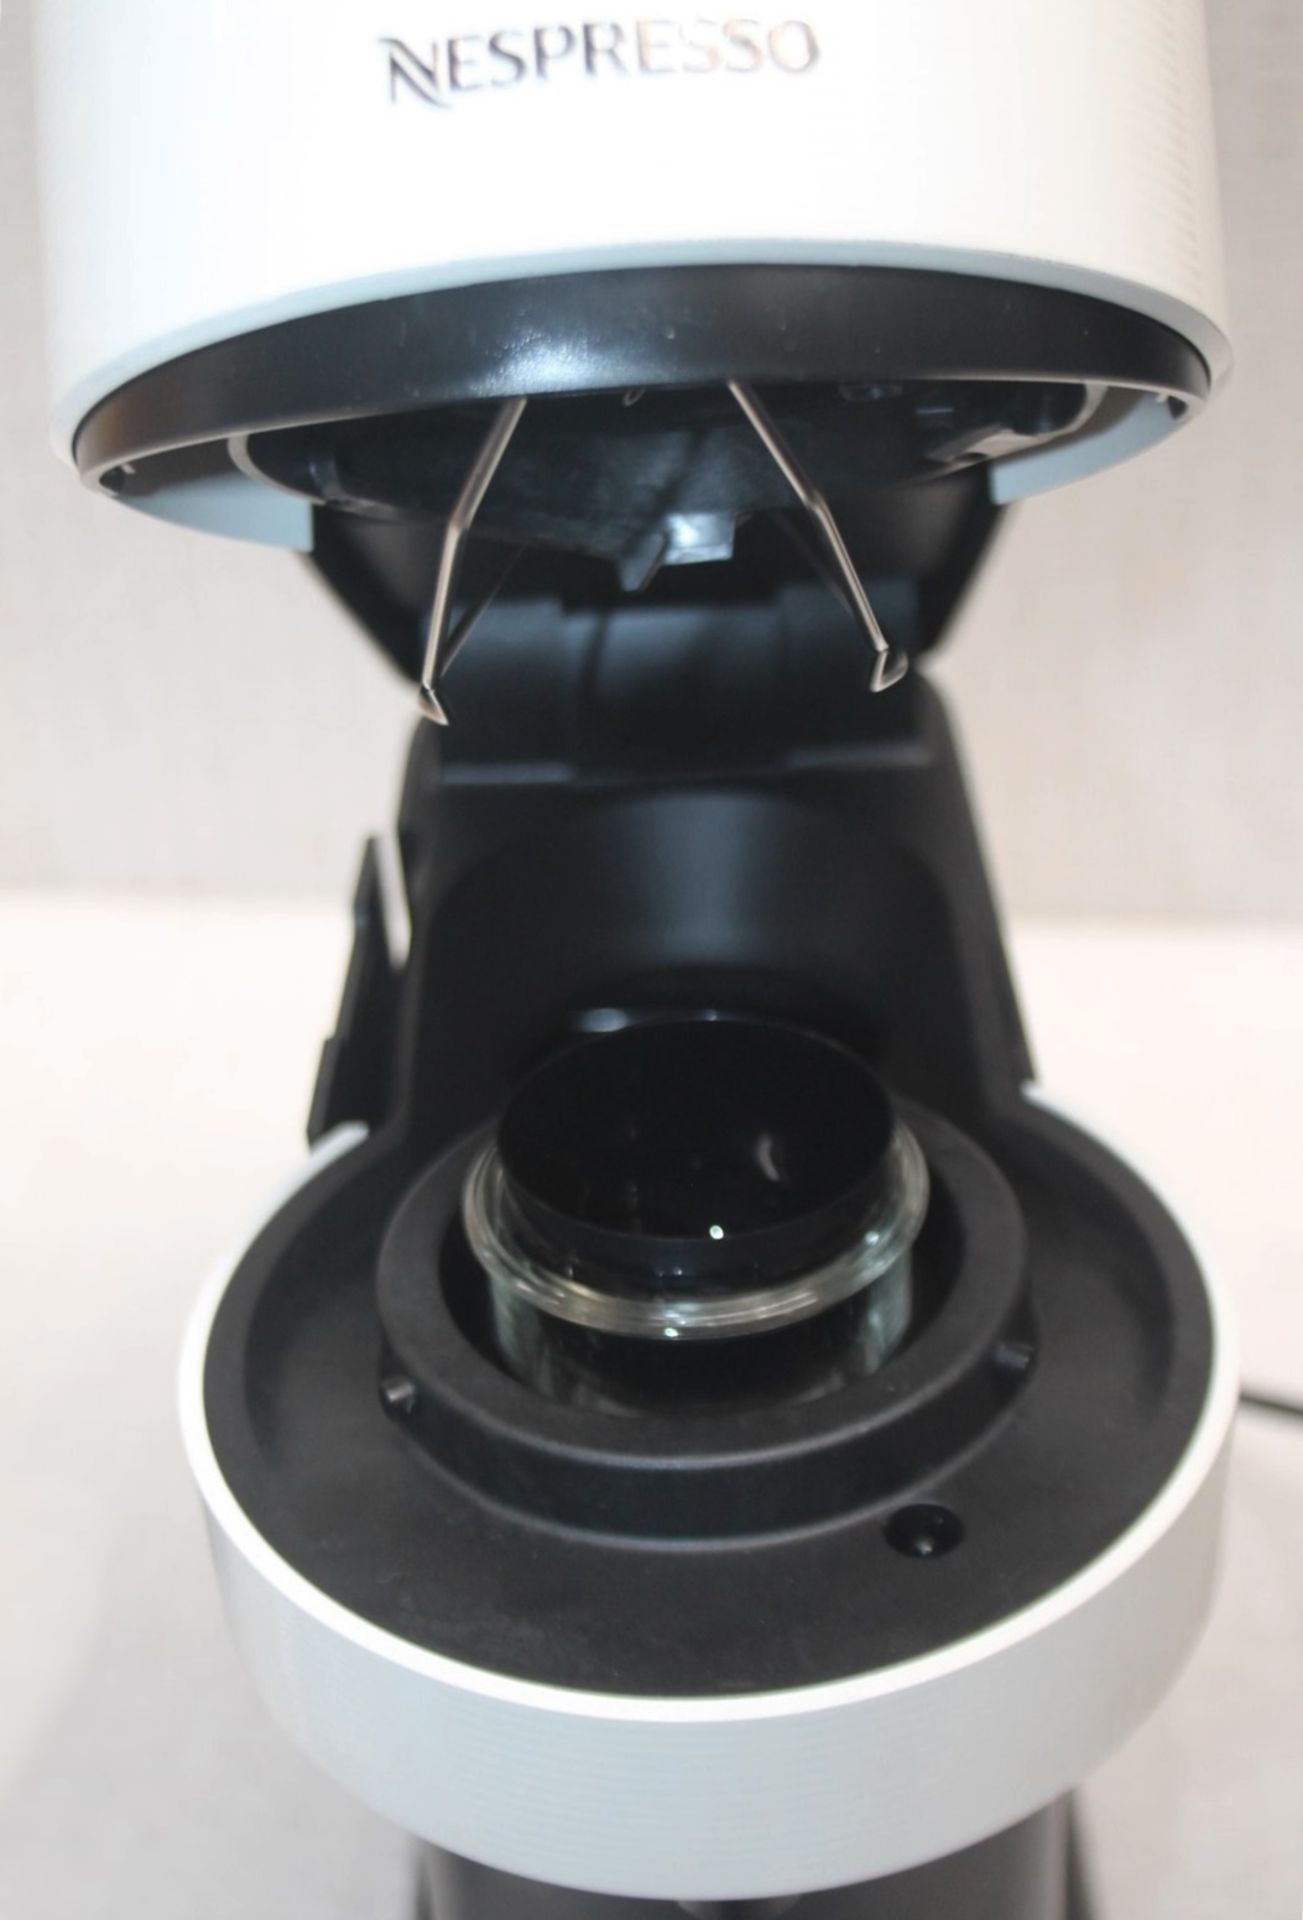 1 x NESPRESSO 'Vertou' Next Coffee Machine with Aeroccino3 Milk Frother - Original Price £200.00 - Image 11 of 21